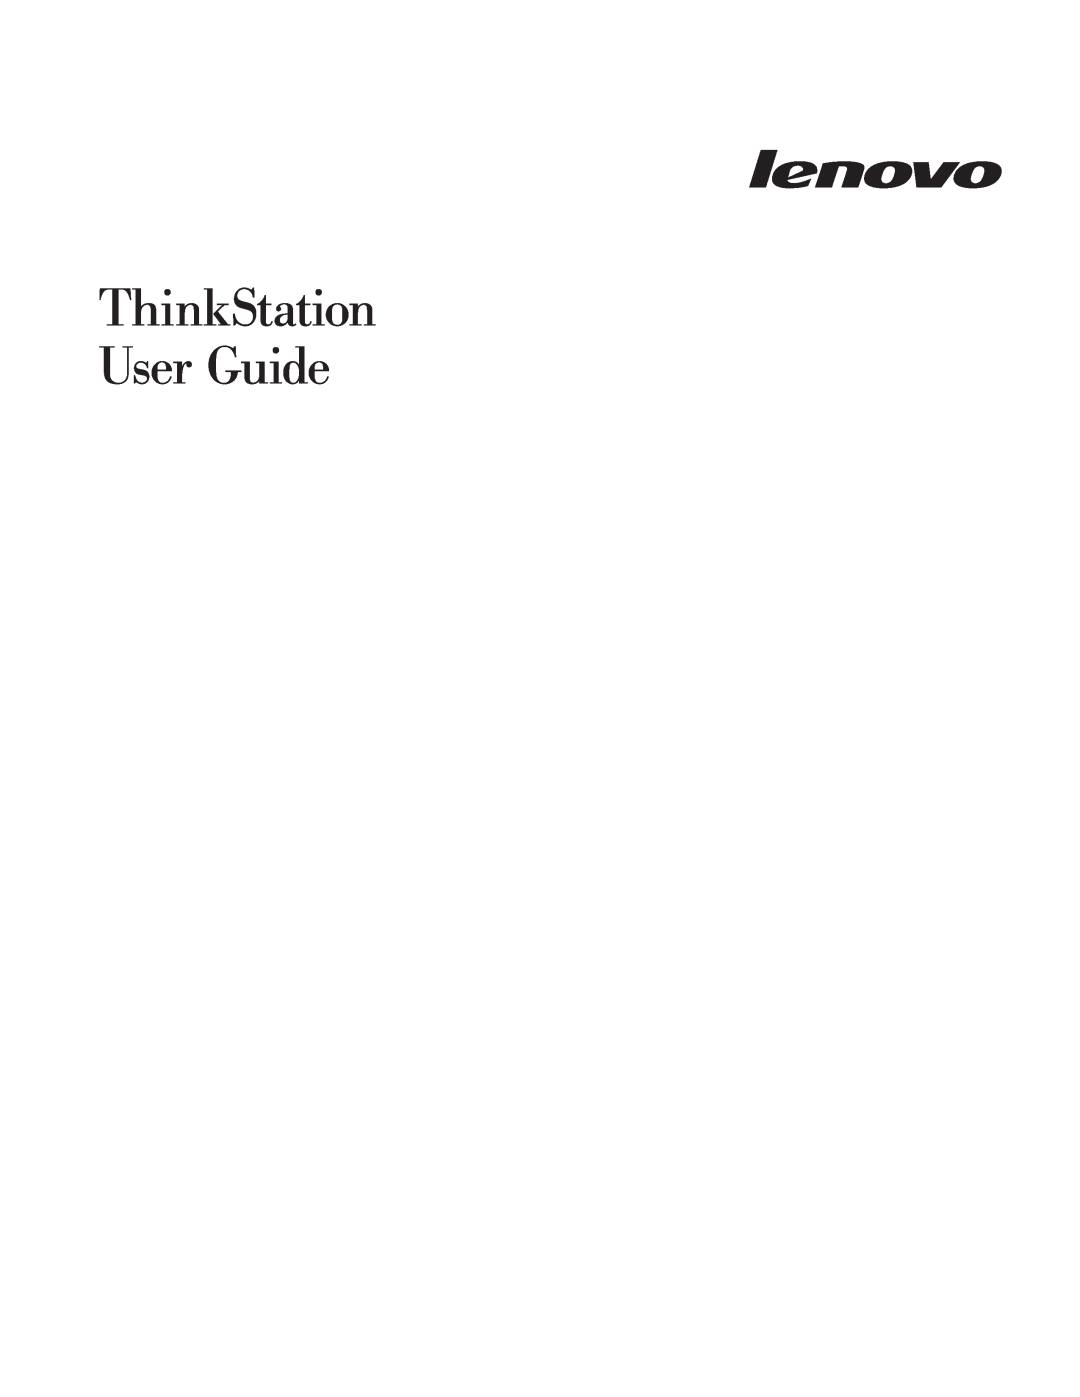 Lenovo 6439, 6493, 6483, 6449, 6427, 6423 manual ThinkStation User Guide 